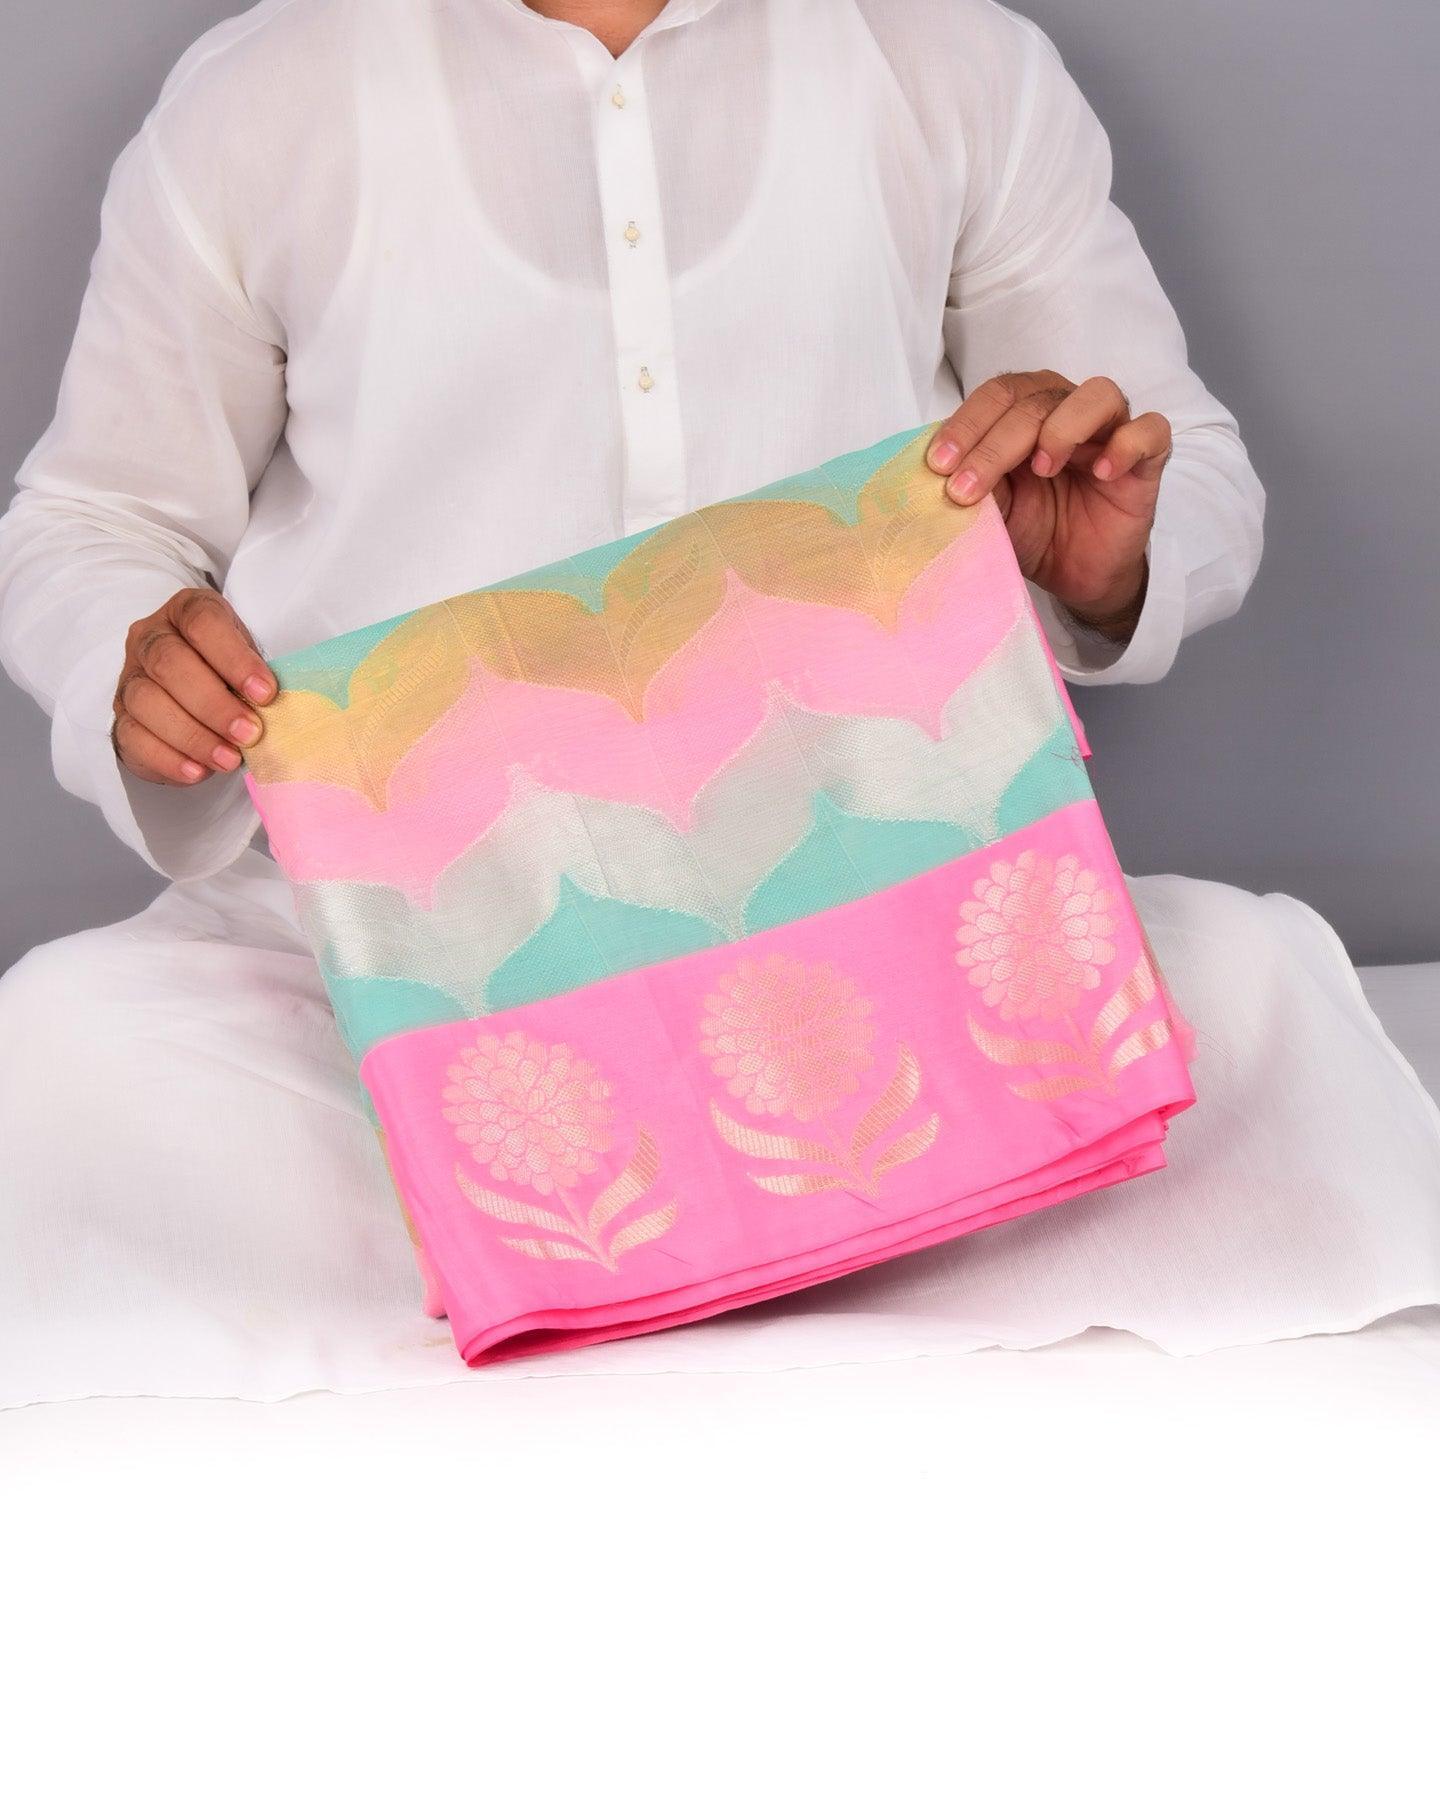 Multi Pink Banarasi Zari Wings Cutwork Brocade Woven Art Kora Silk Saree - By HolyWeaves, Benares